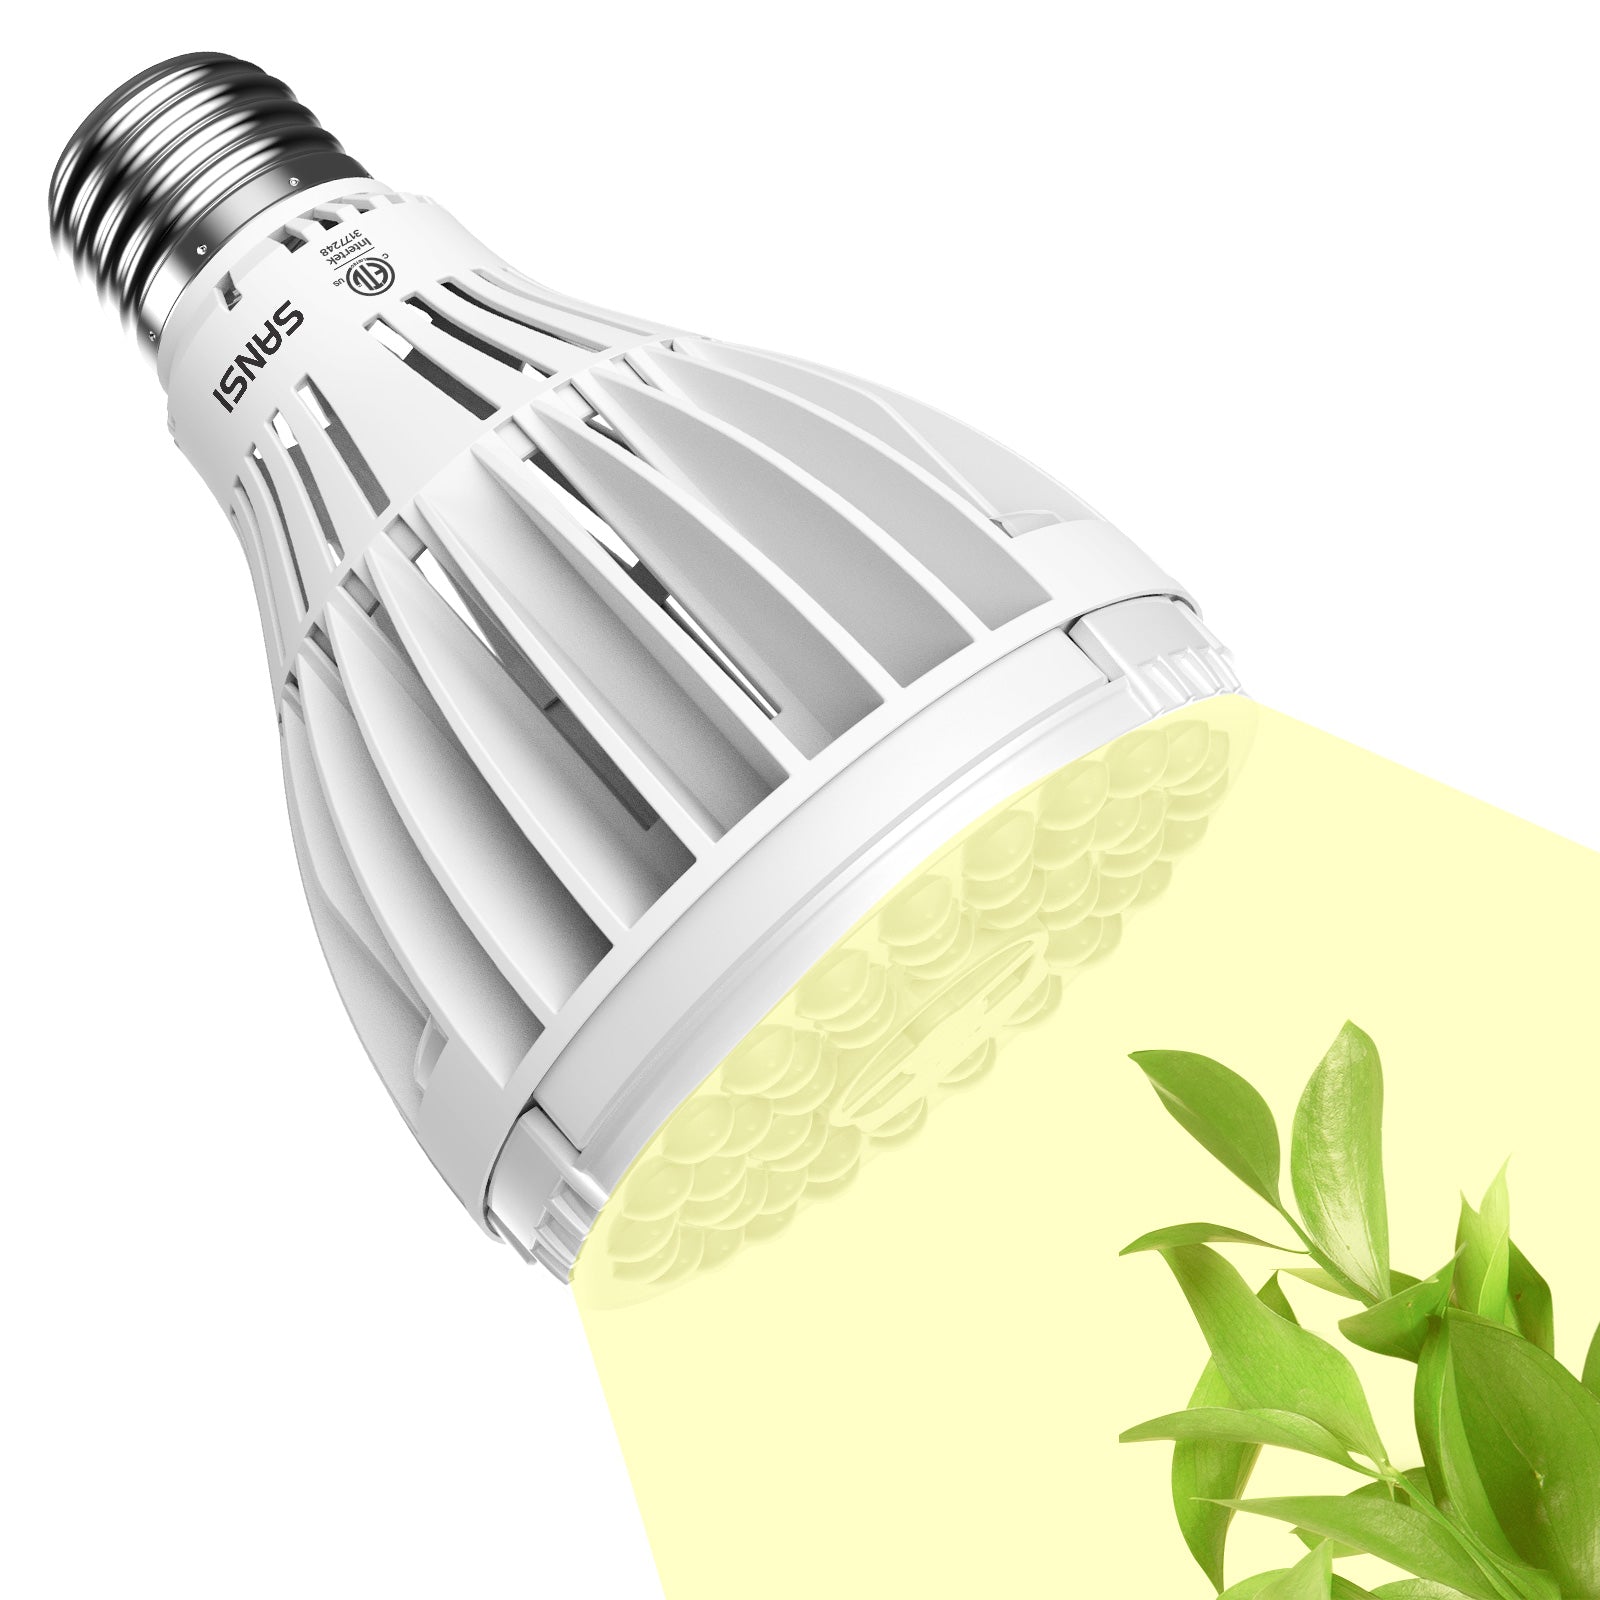 PAR25 32W LED Grow Light Bulb for indoor plants